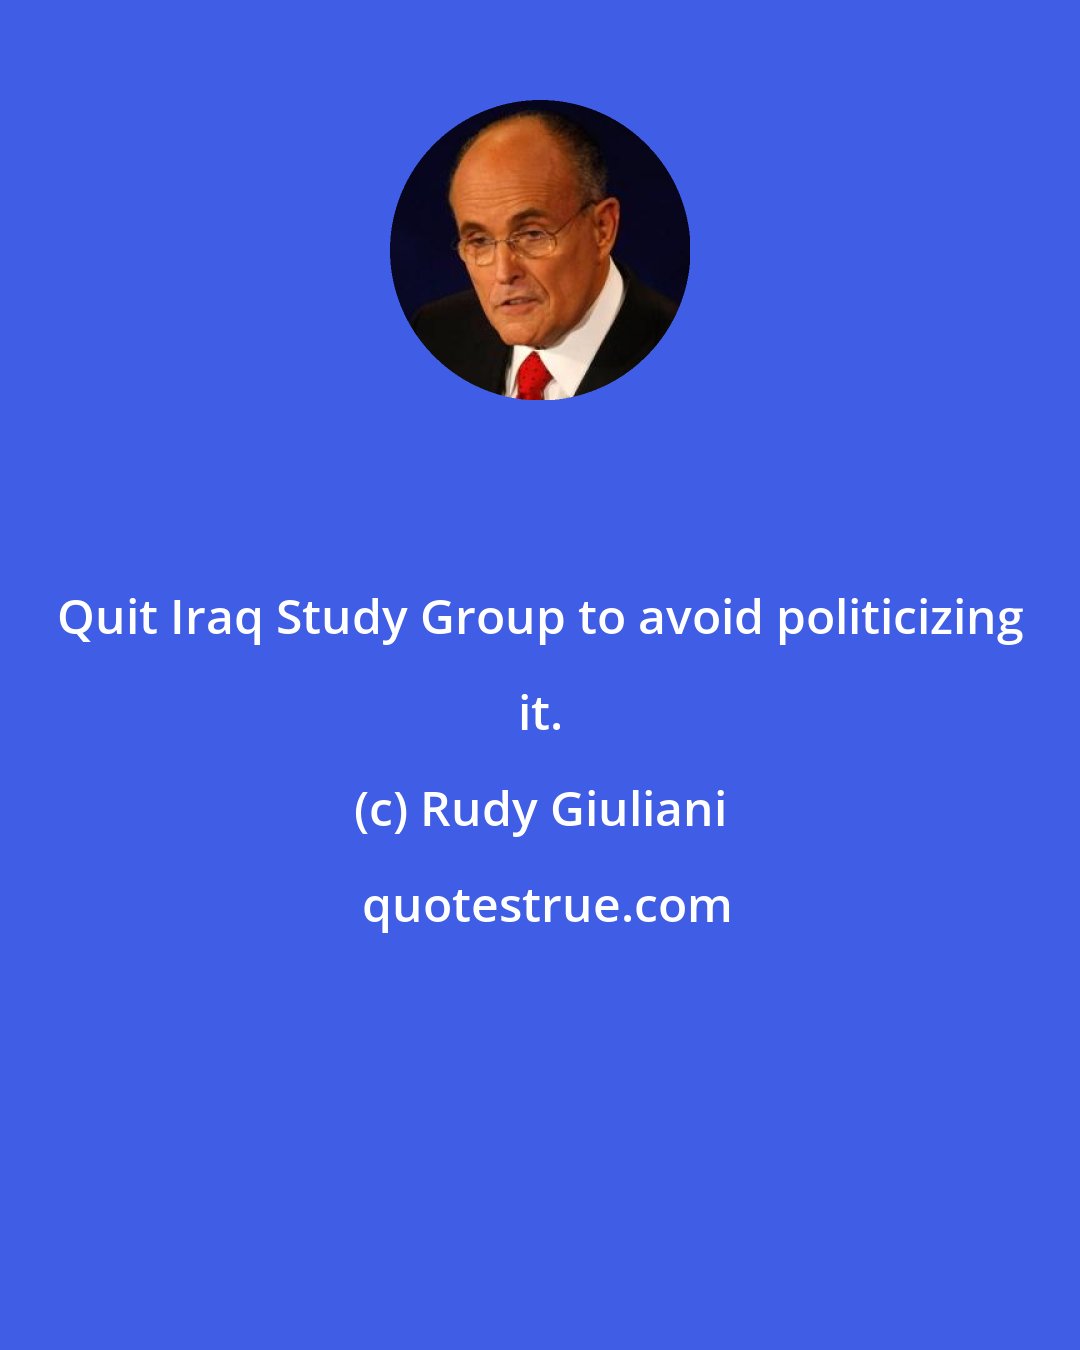 Rudy Giuliani: Quit Iraq Study Group to avoid politicizing it.